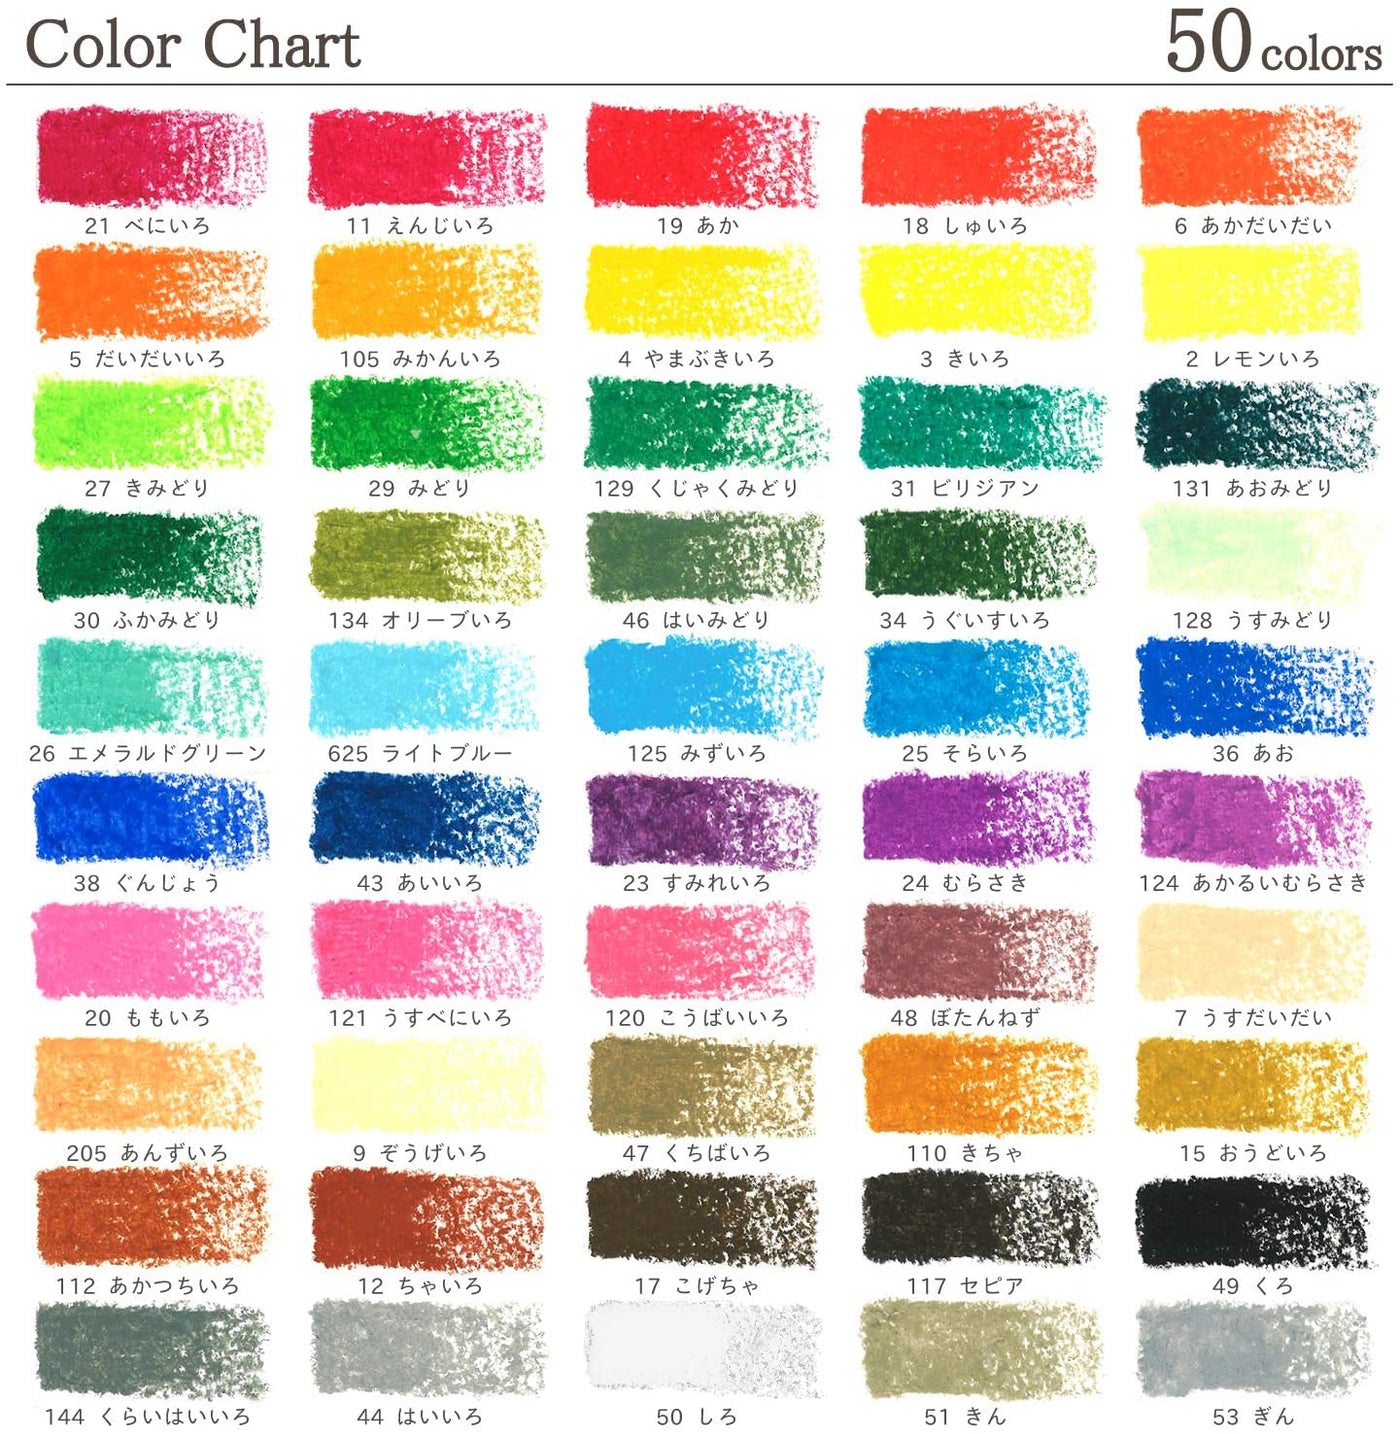 Sakura Giant Crayon 8/12 Colours - International Art Supplies (Hong Kong)  Limited